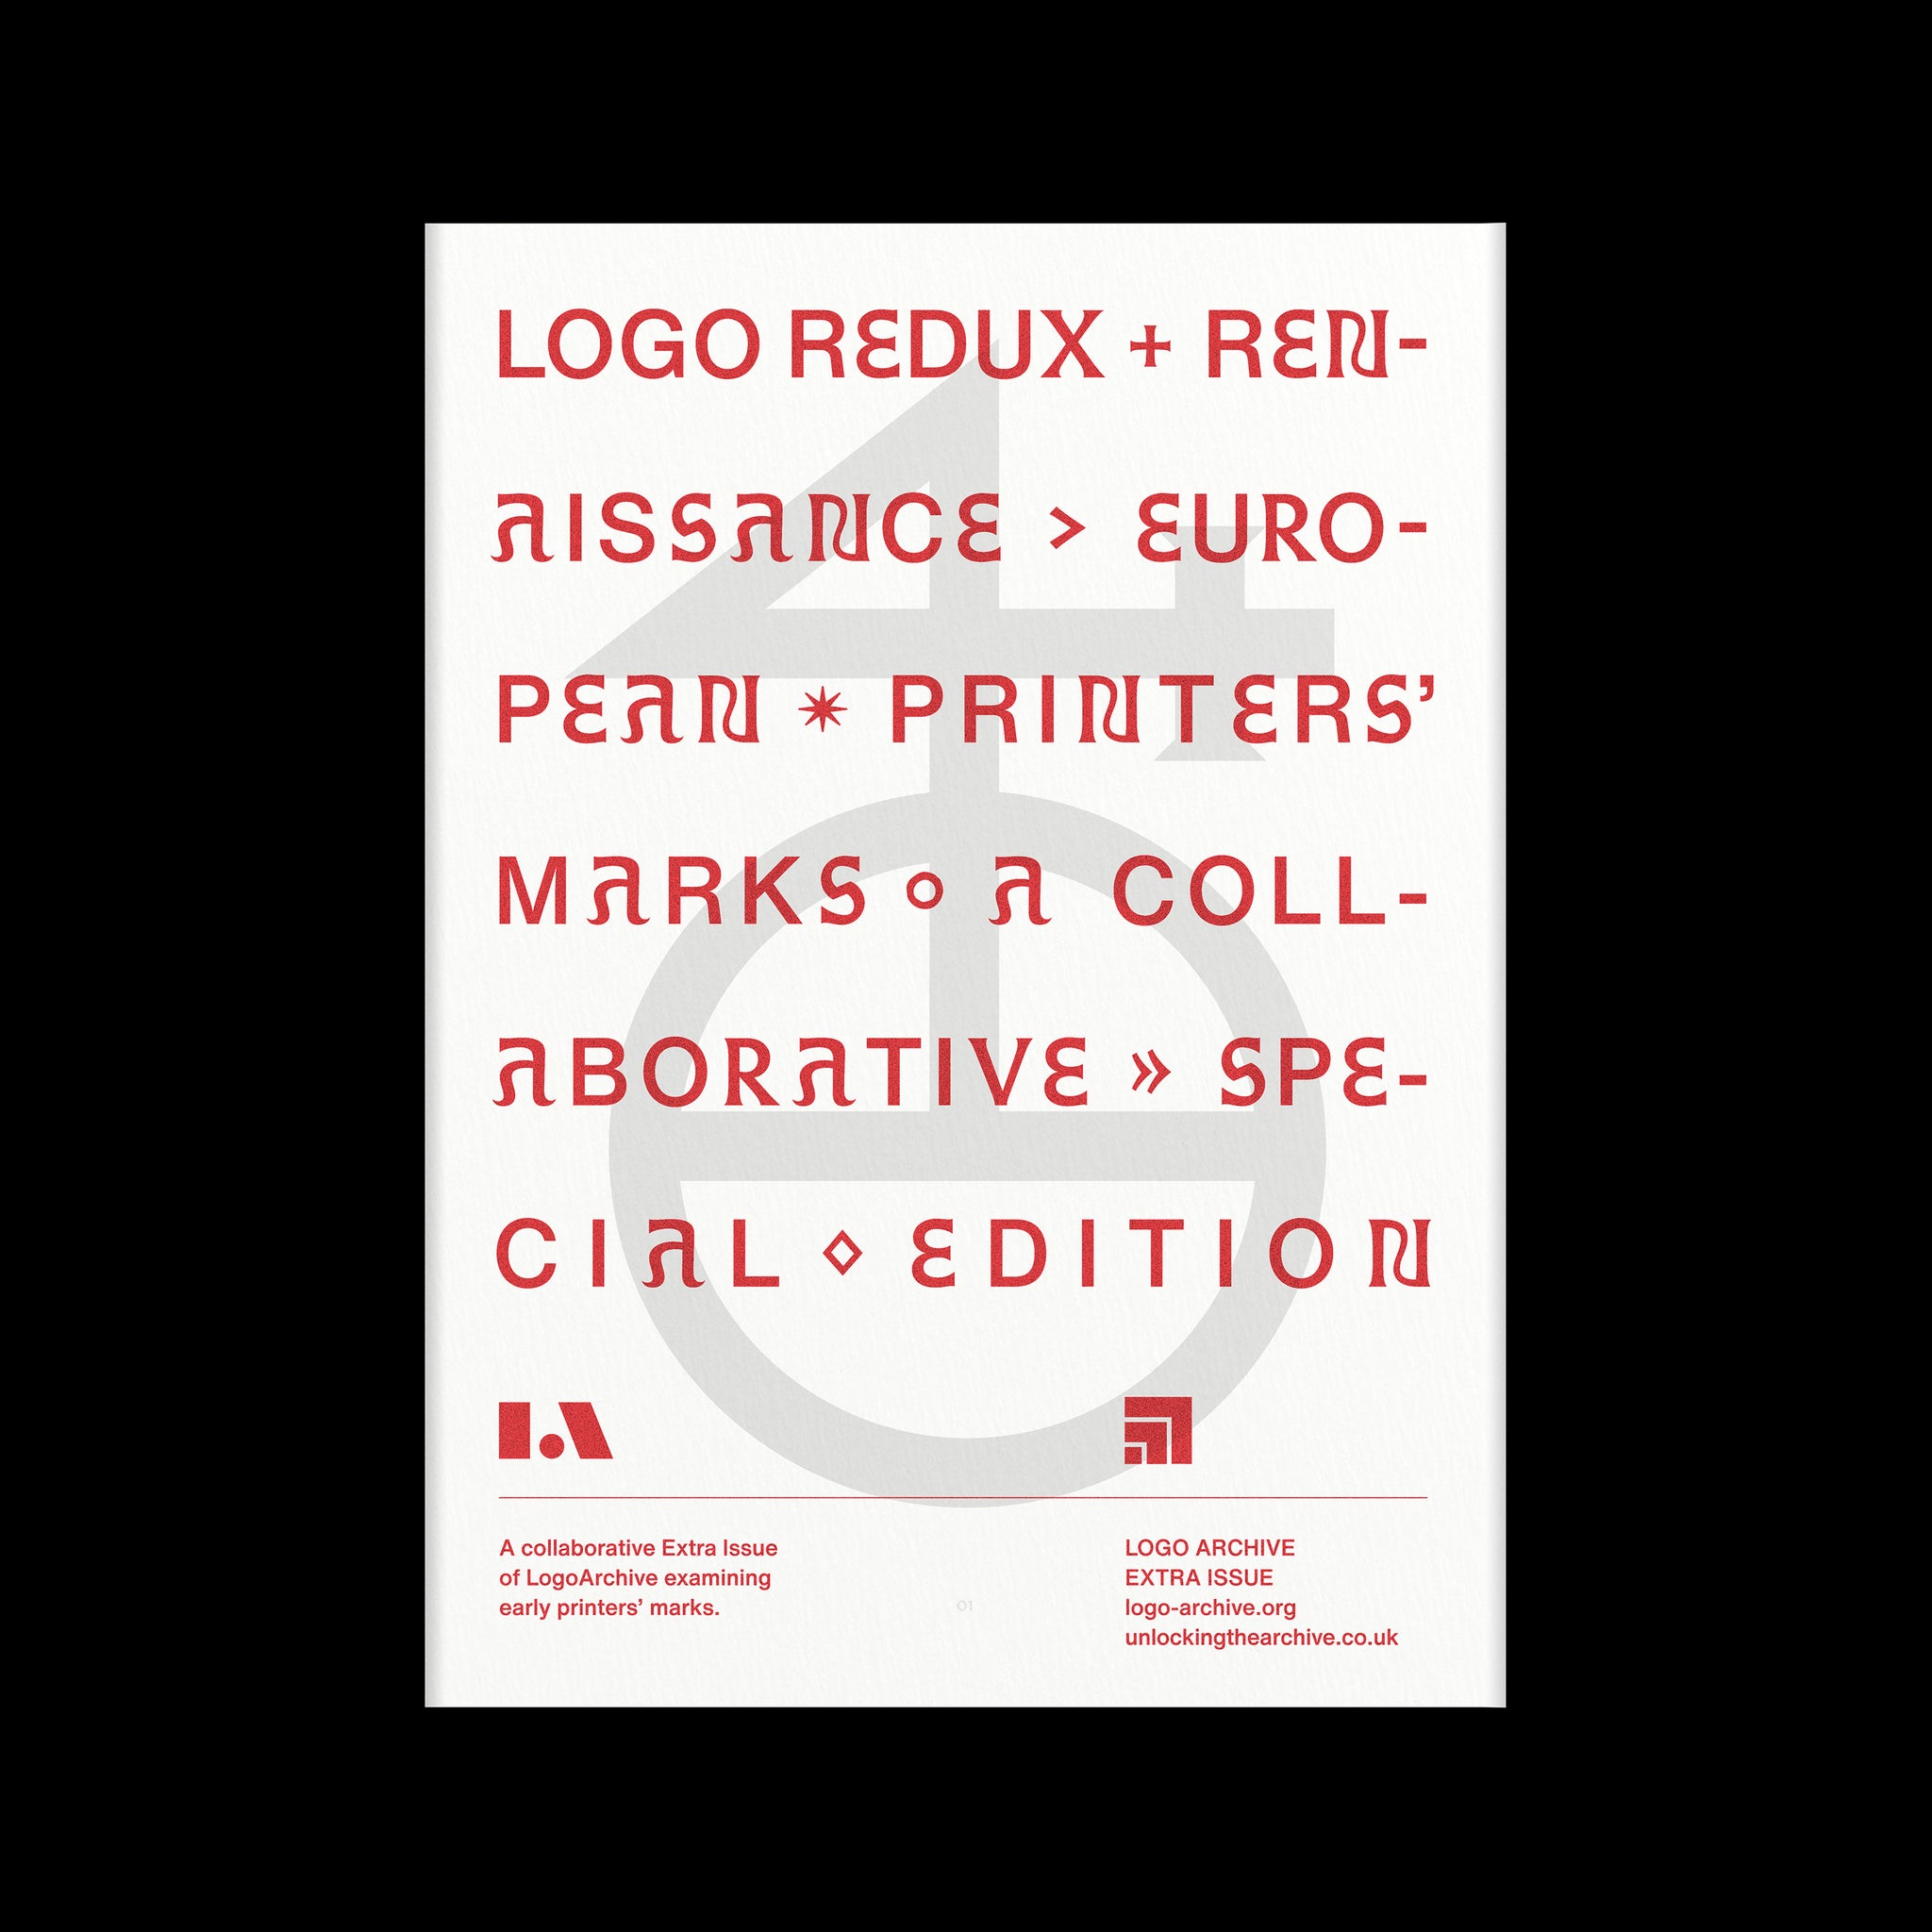 LogoArchive Extra Issue 5: Logo Redux